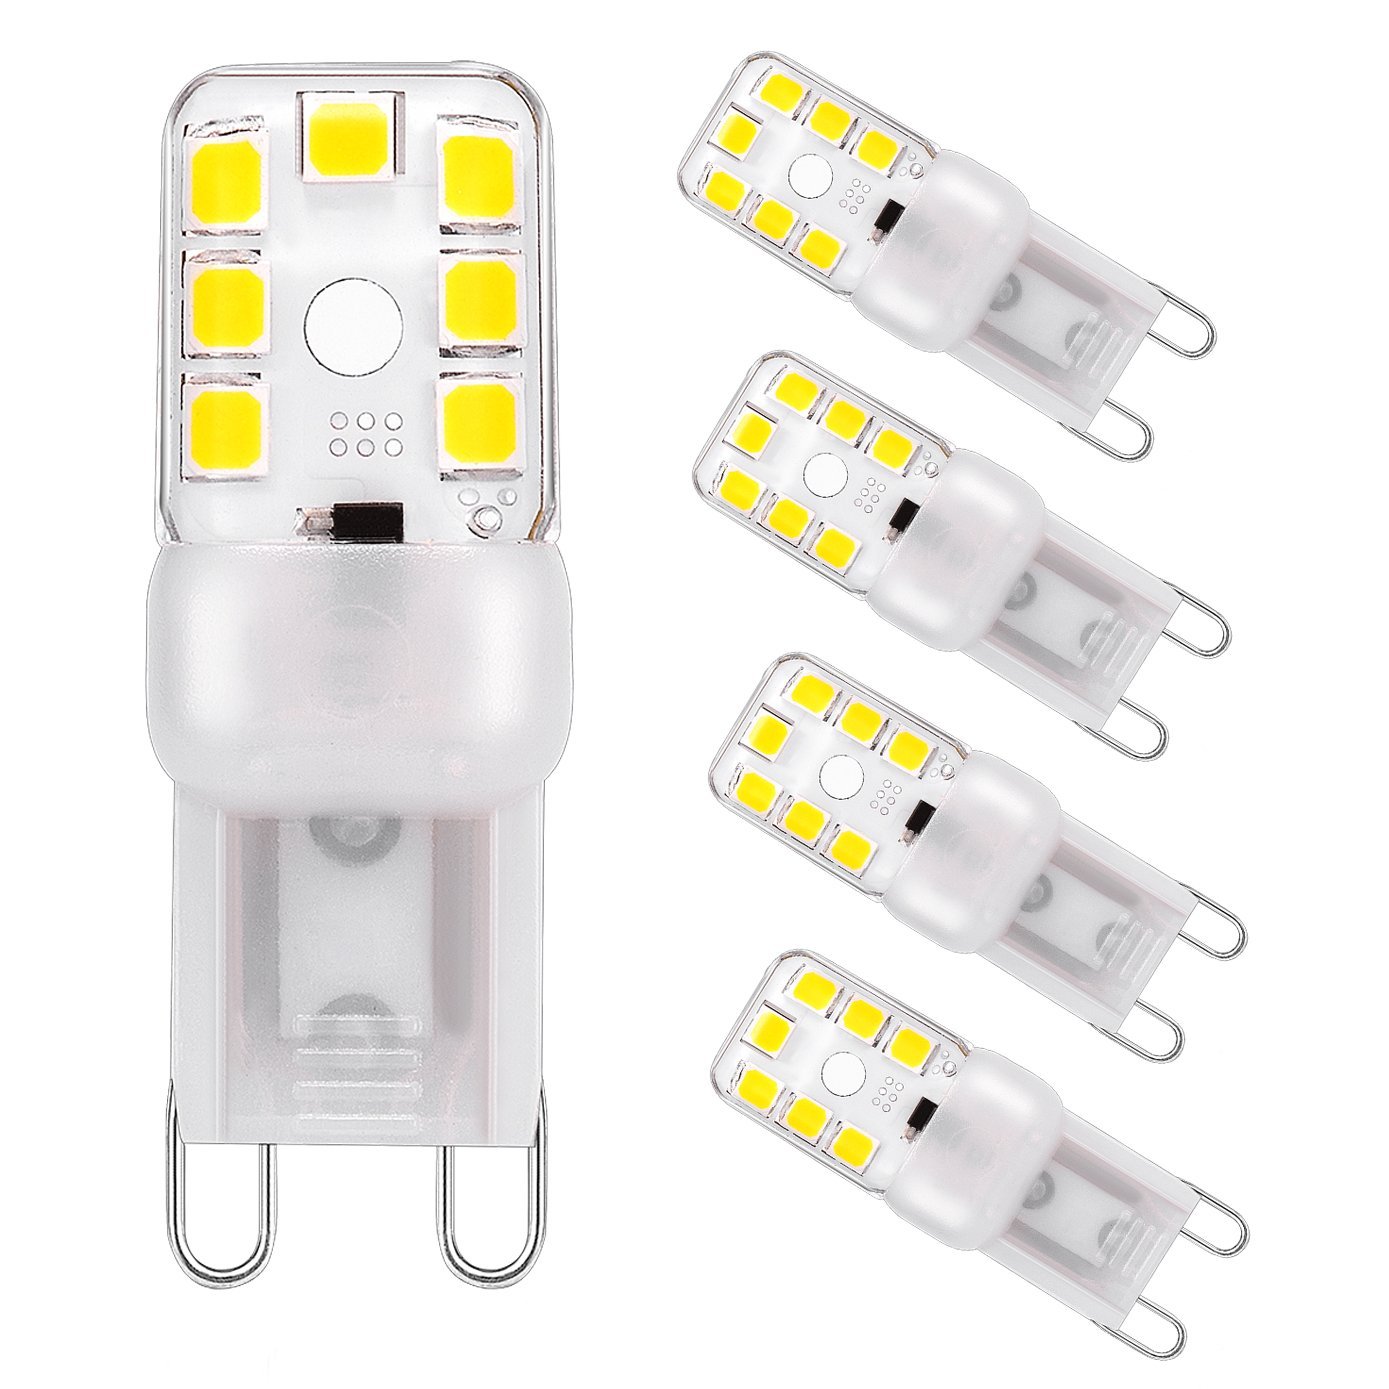 G9 LED Bulb Dimmable 3W Daylight White - 30W Halogen Equivalent ,Warm White  G9 Base Chandeliers Bathroom Ceiling Lights Energy Saving Bulbs AC120V  （pack of 5) - I-SHUNFA